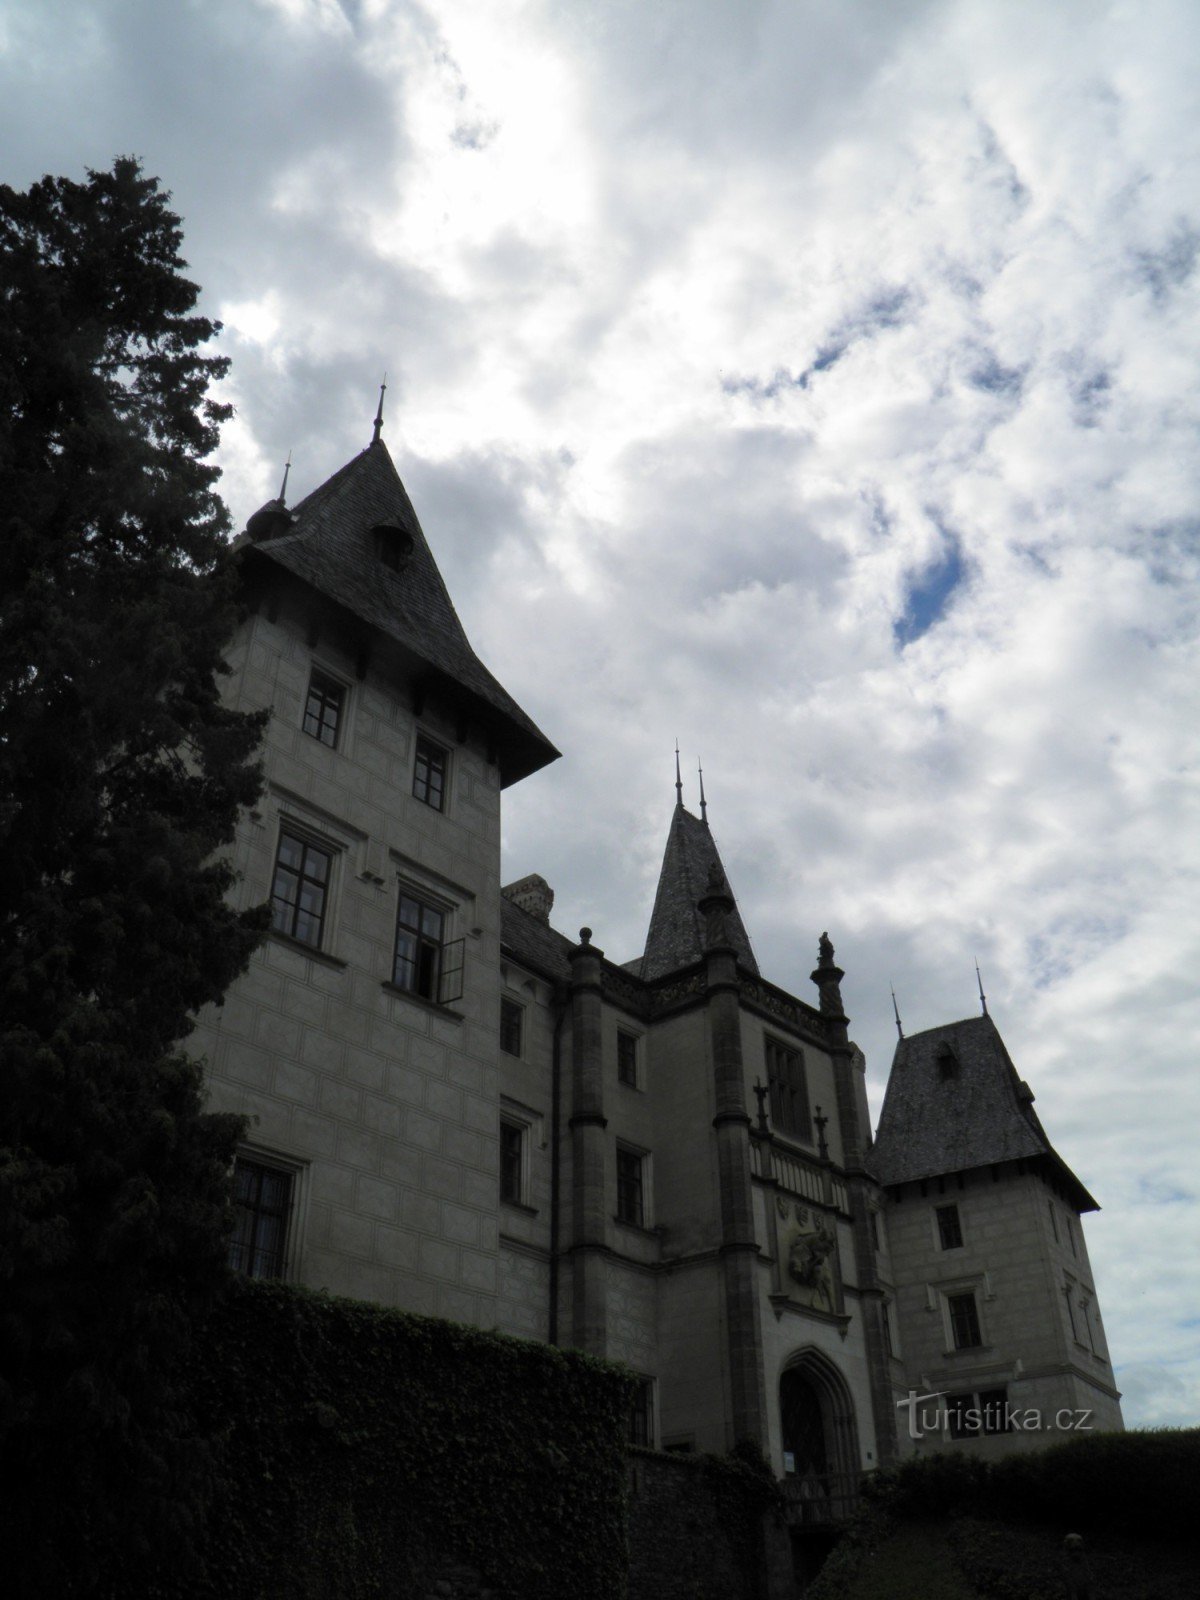 Žleby Castle.